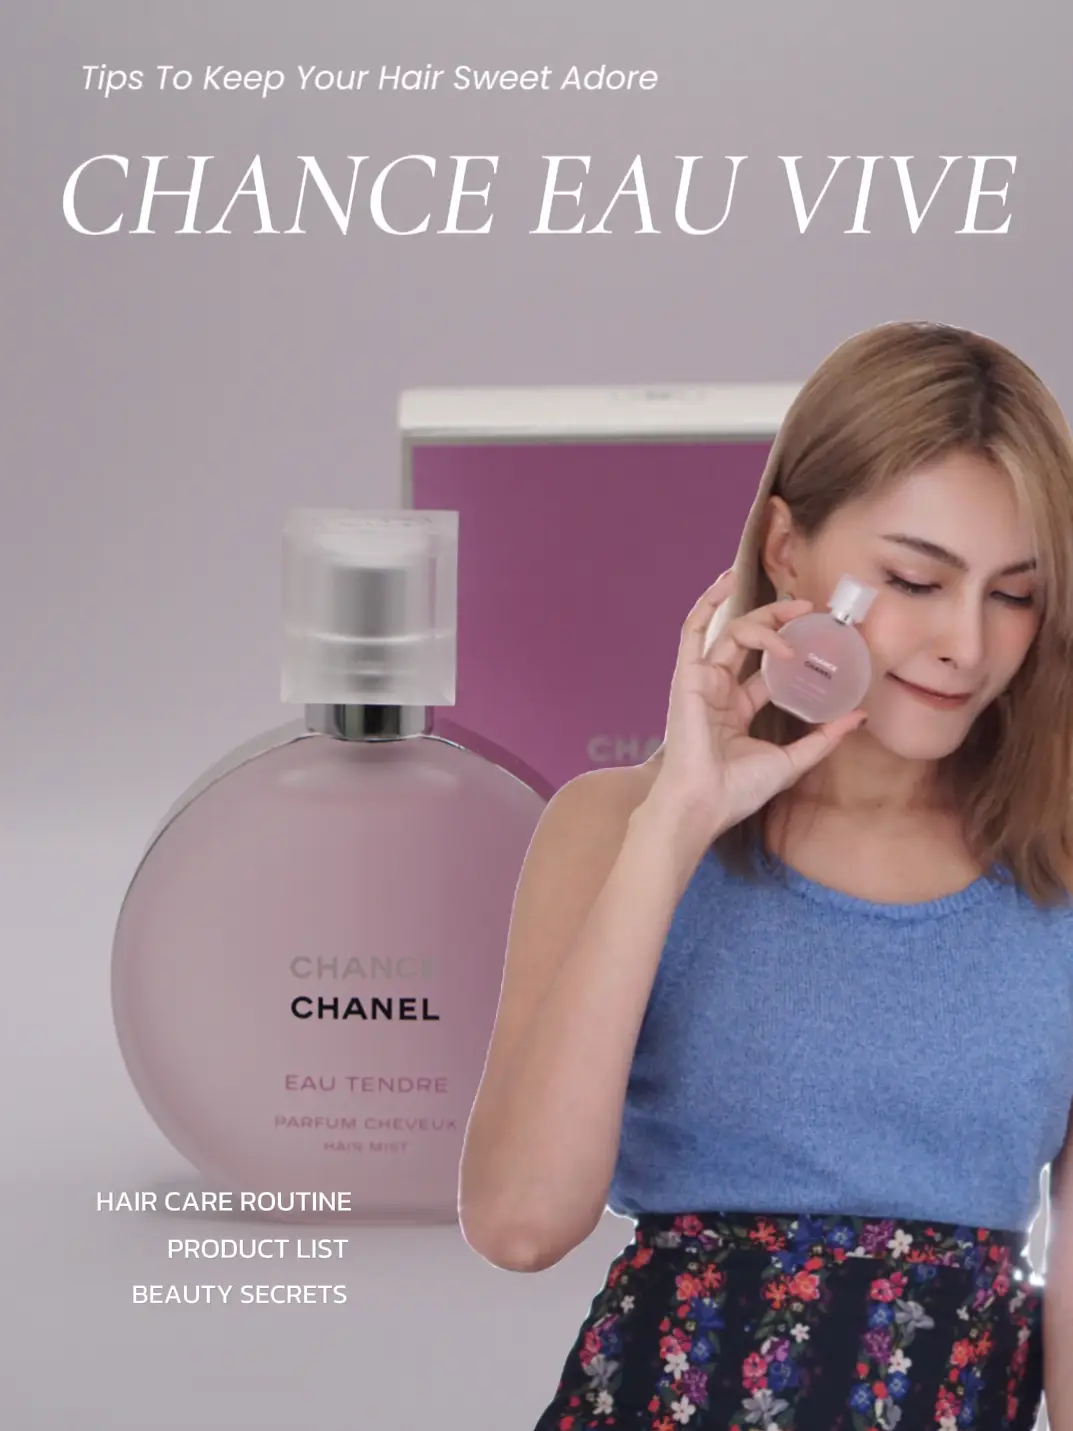 Chanel CHANCE EAU VIVE Hair Perfume Spray, Gallery posted by  Jibjoycejibjib